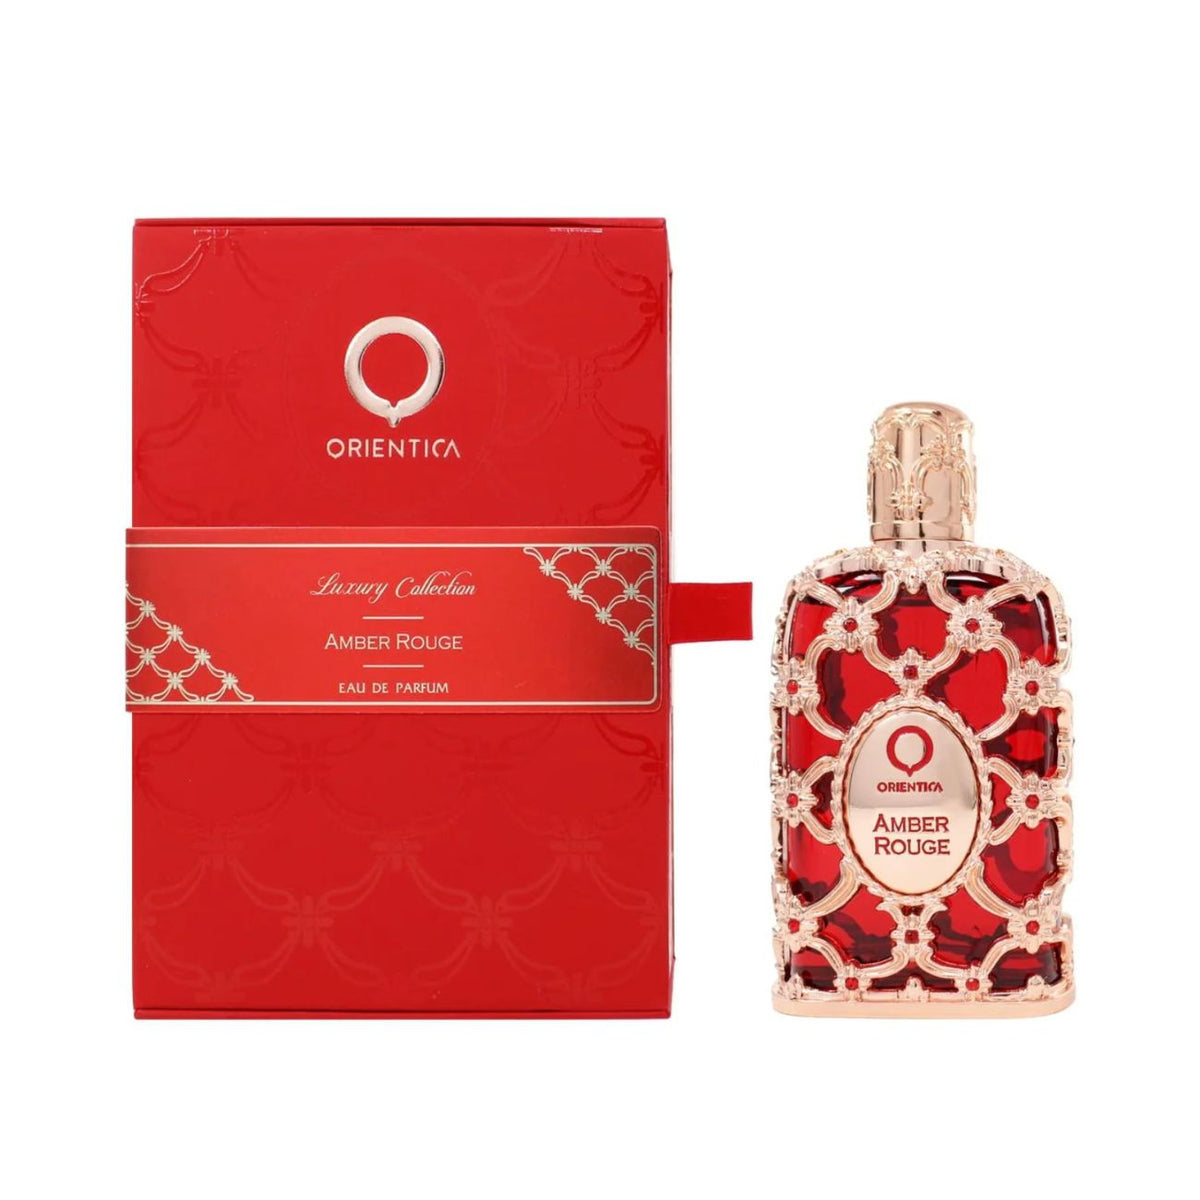 Perfume unisex Orientica Amber Rouge Eau de Parfum 80ml